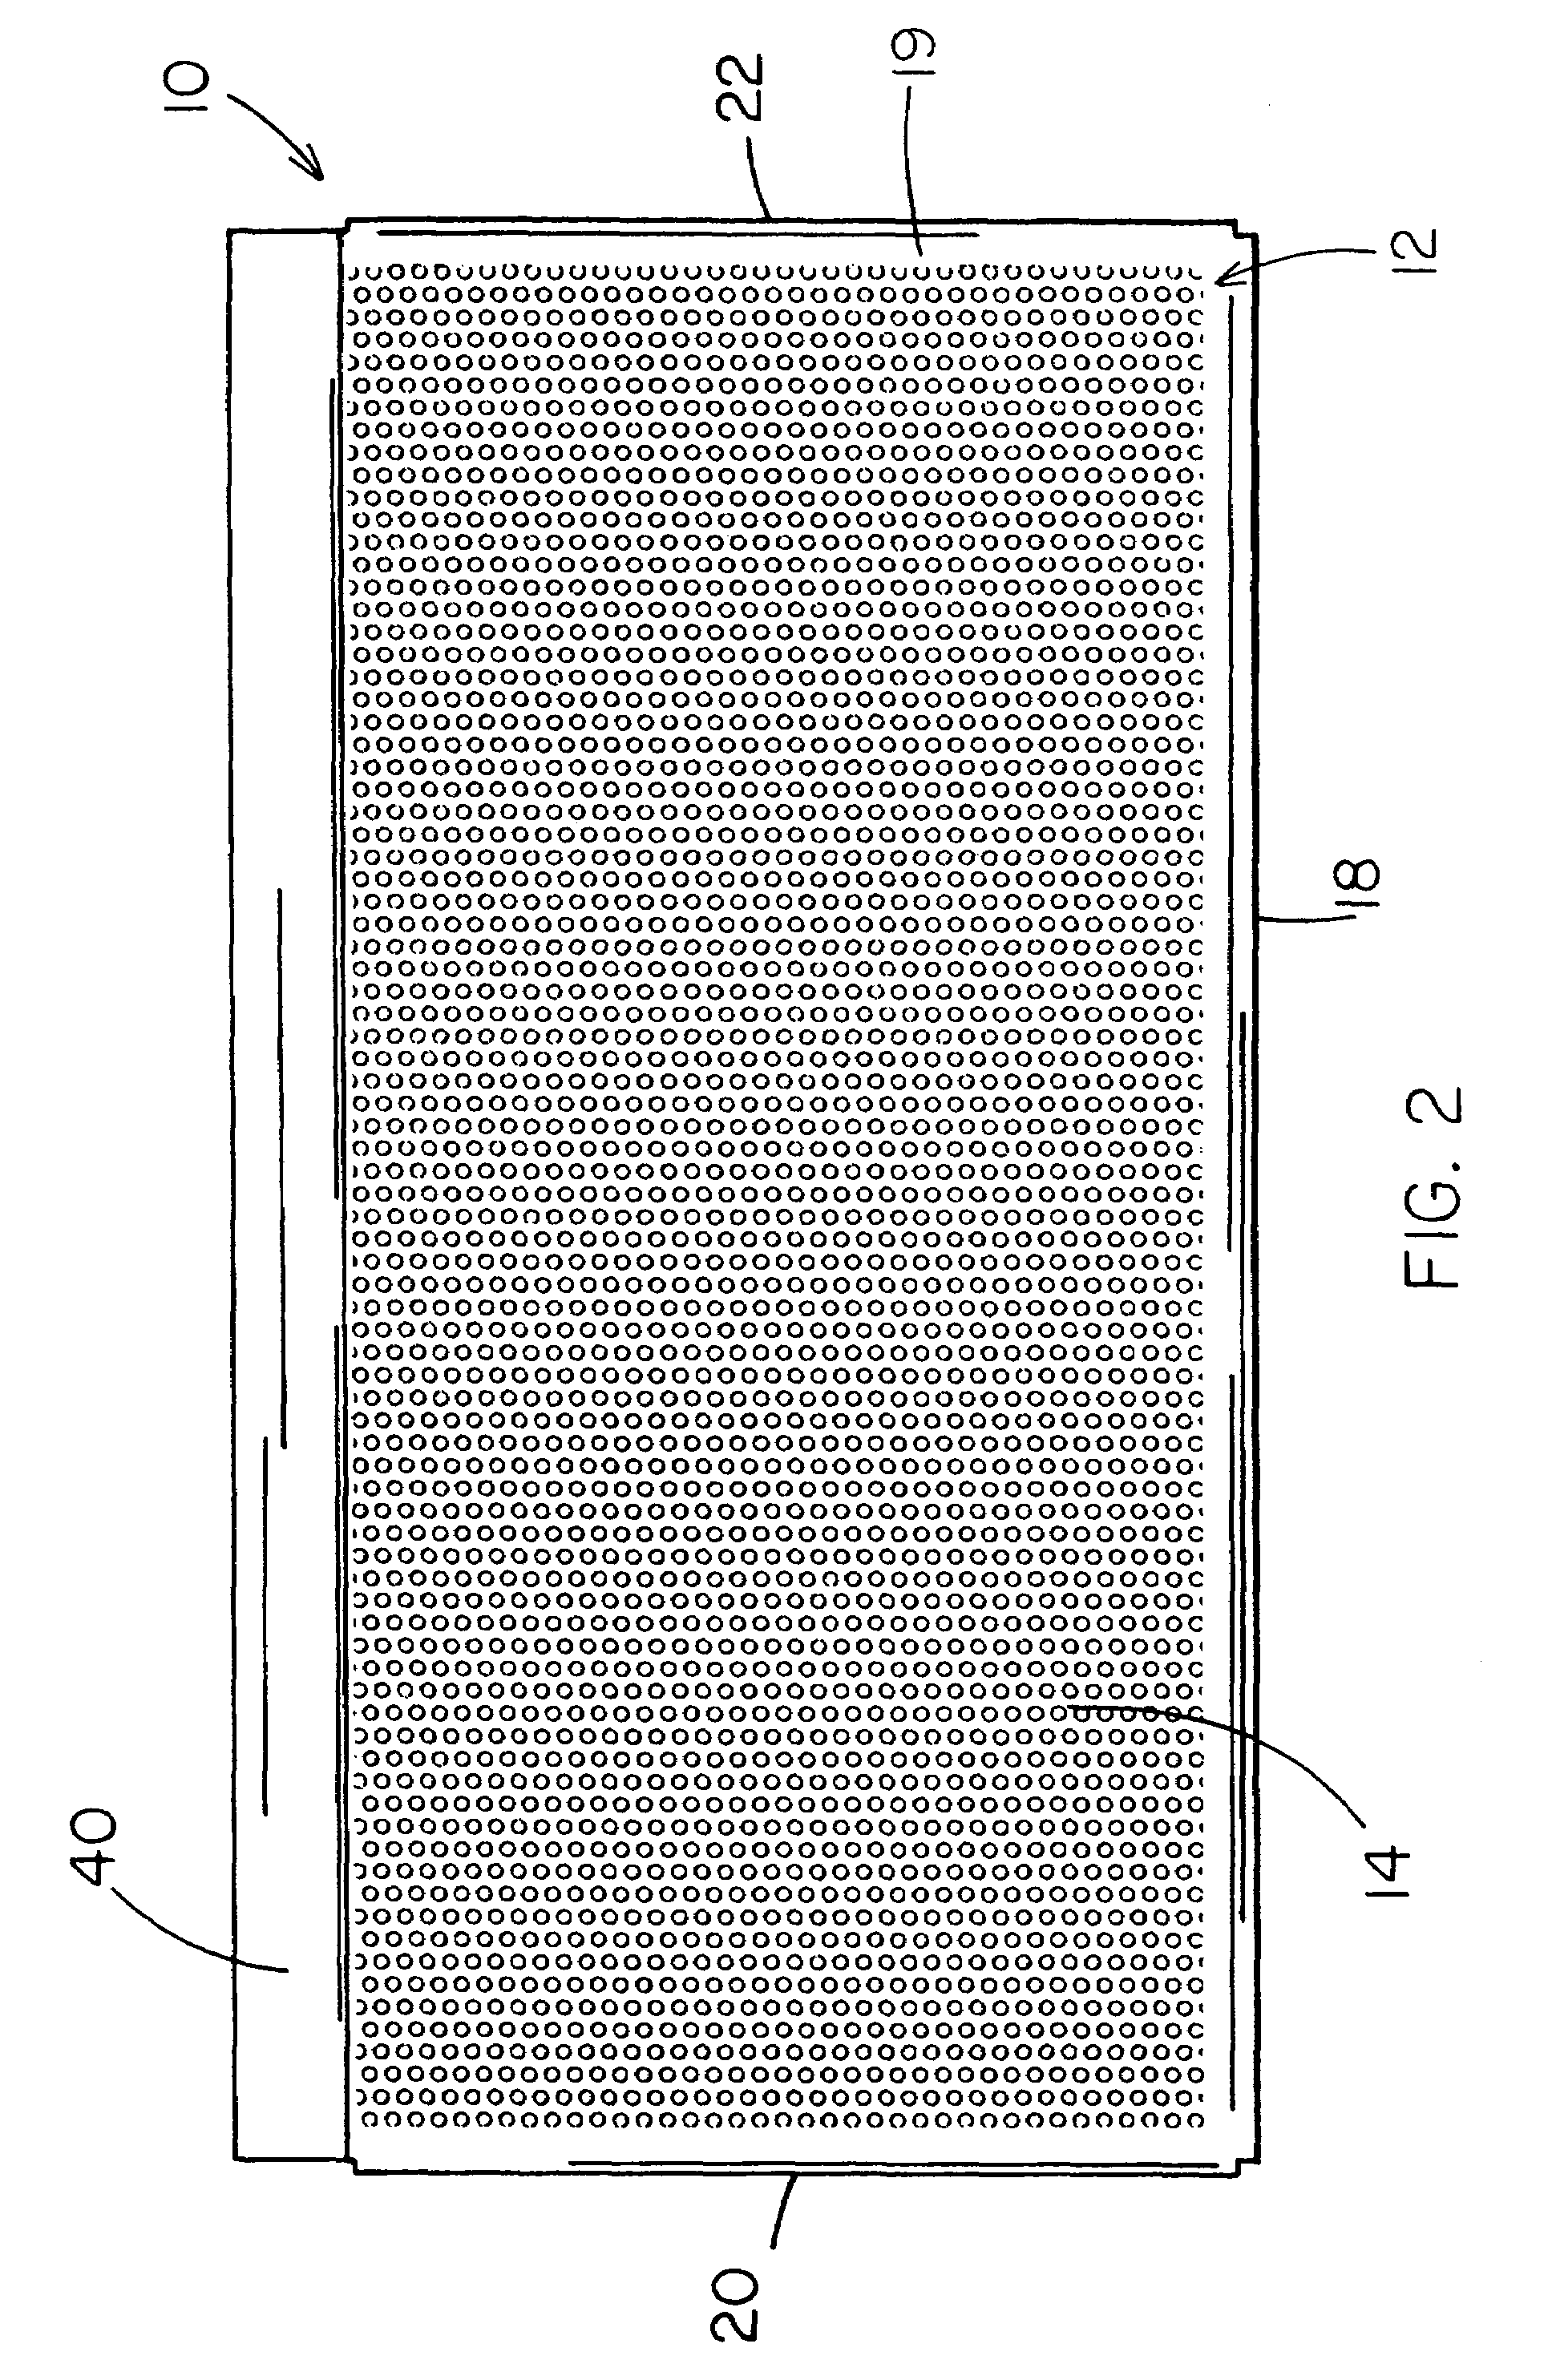 Lay-in tile speaker system